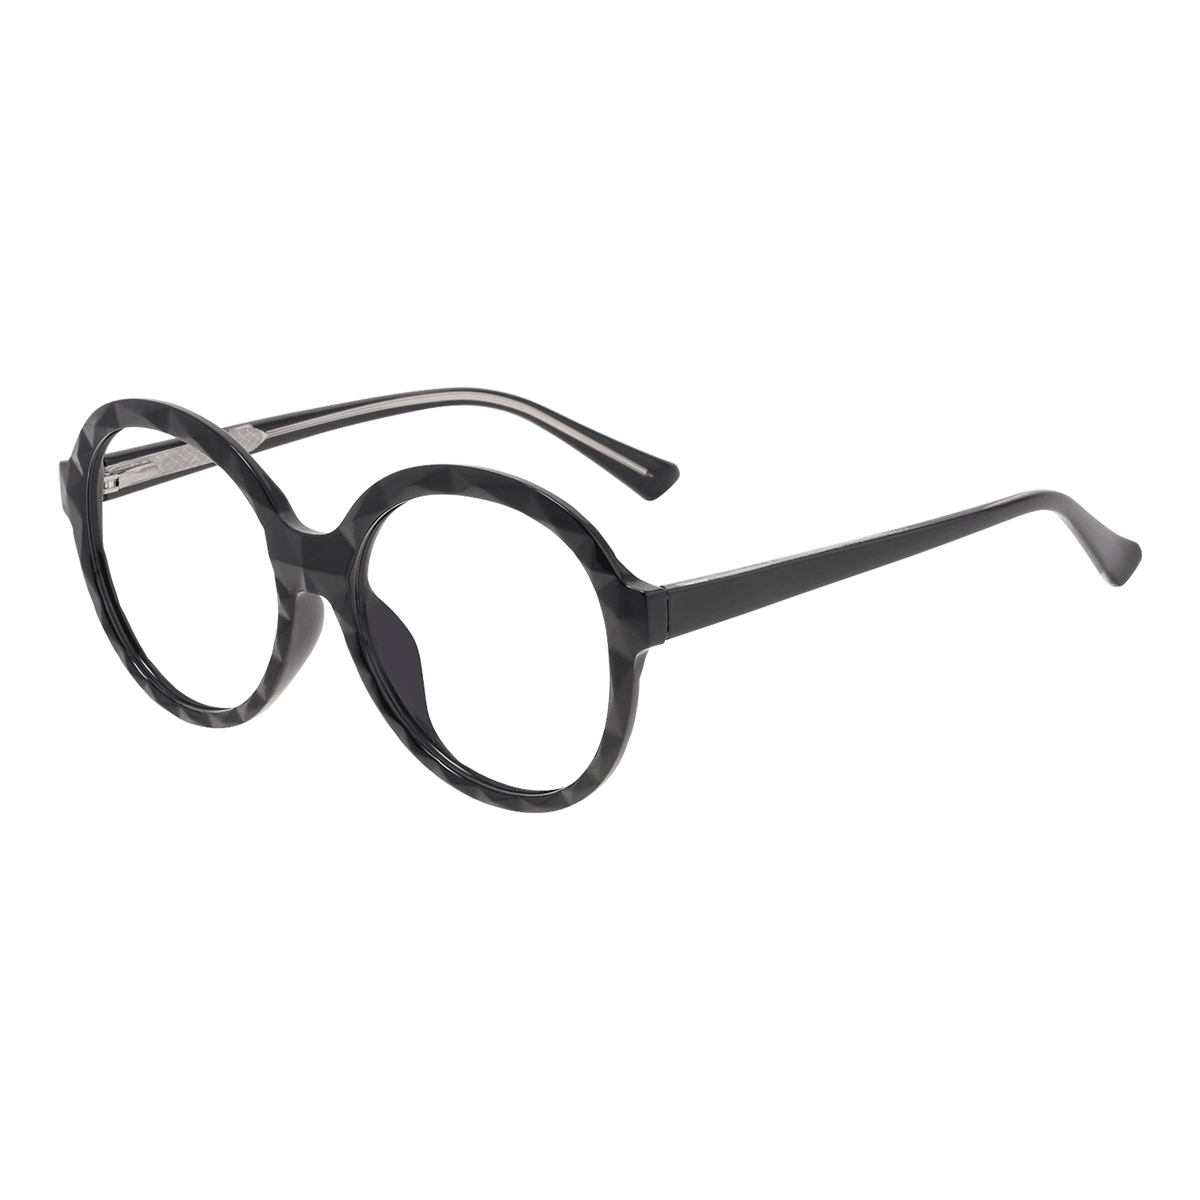 Euphrosyne - Round Black Reading Glasses for Women